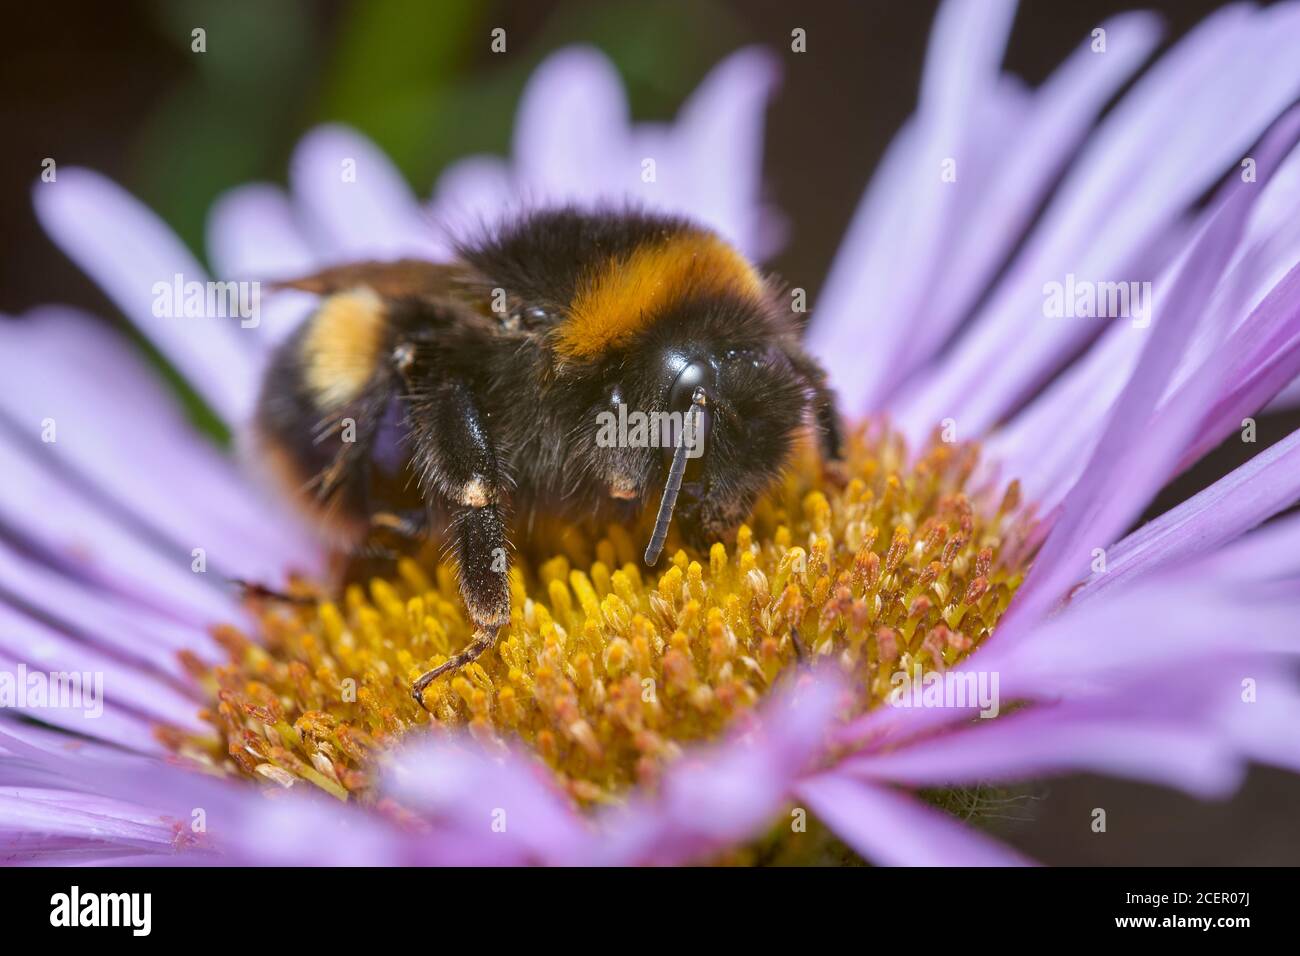 Buff-tailed bumblebee, Bombus terrestris, on Seaside Daisy, Erigeron glaucus Stock Photo